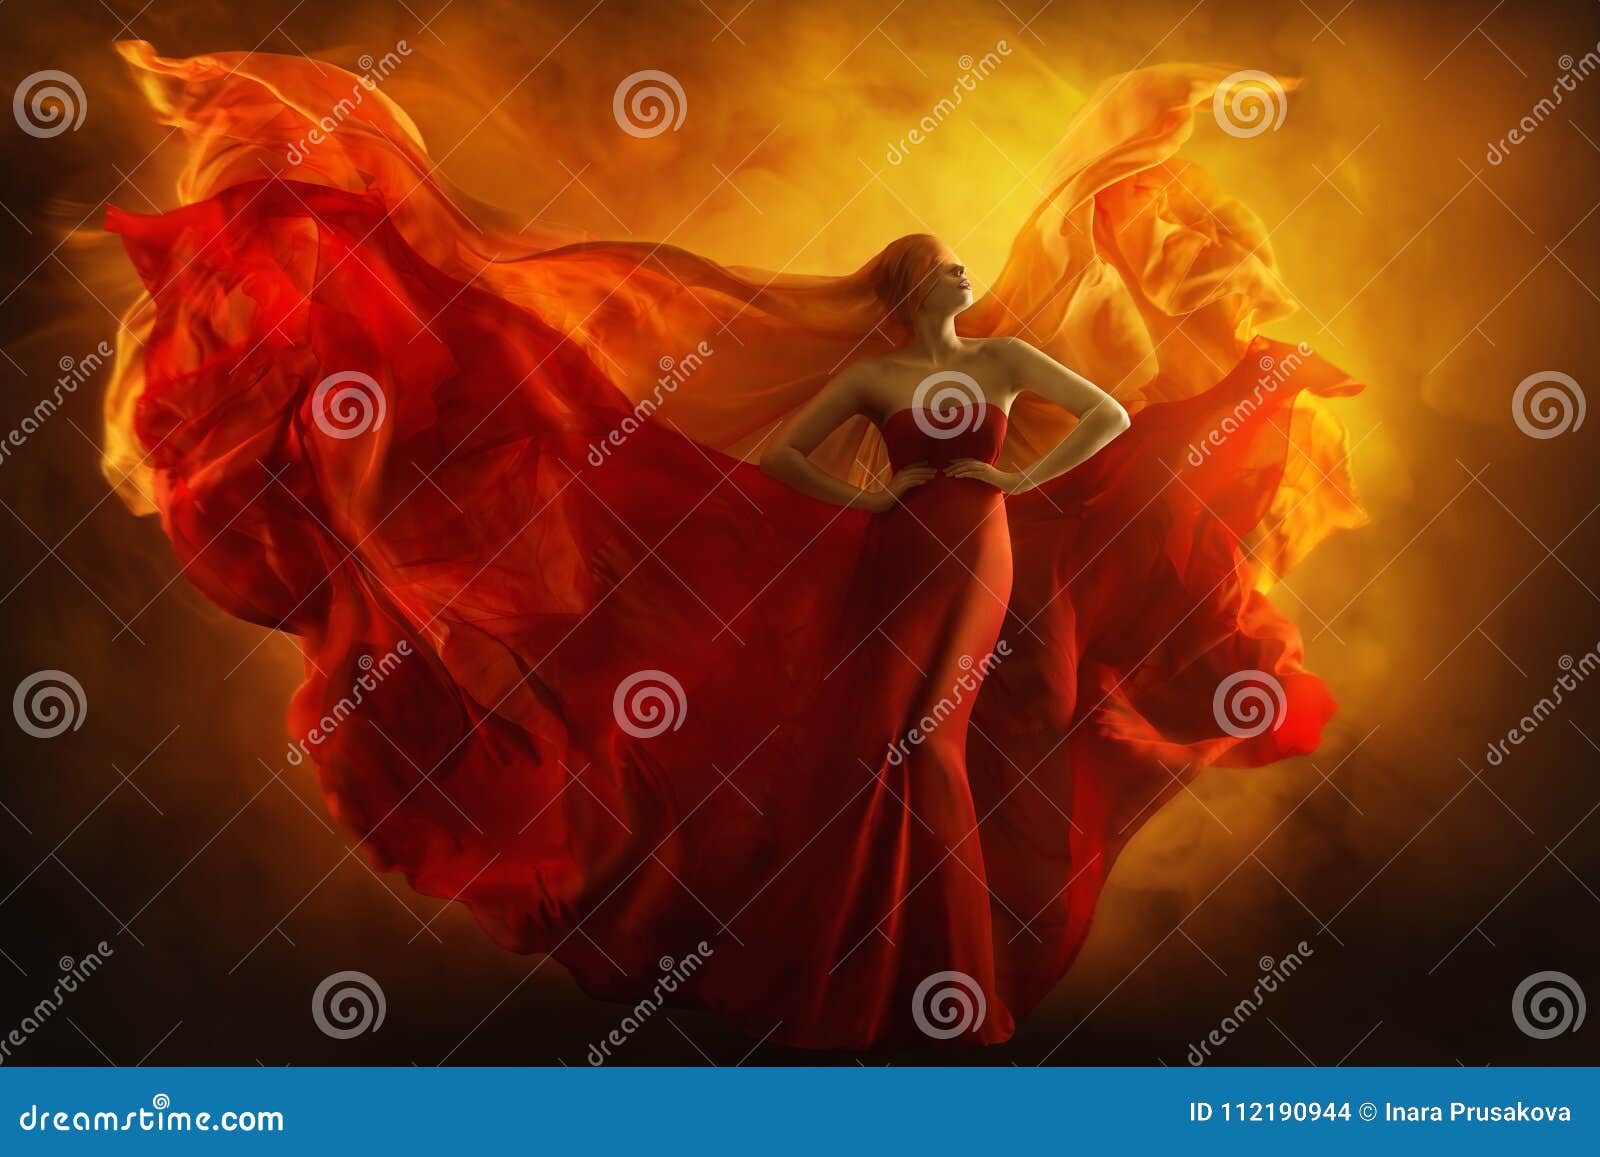 fashion model art fantasy fire dress, blindfolded woman dreams